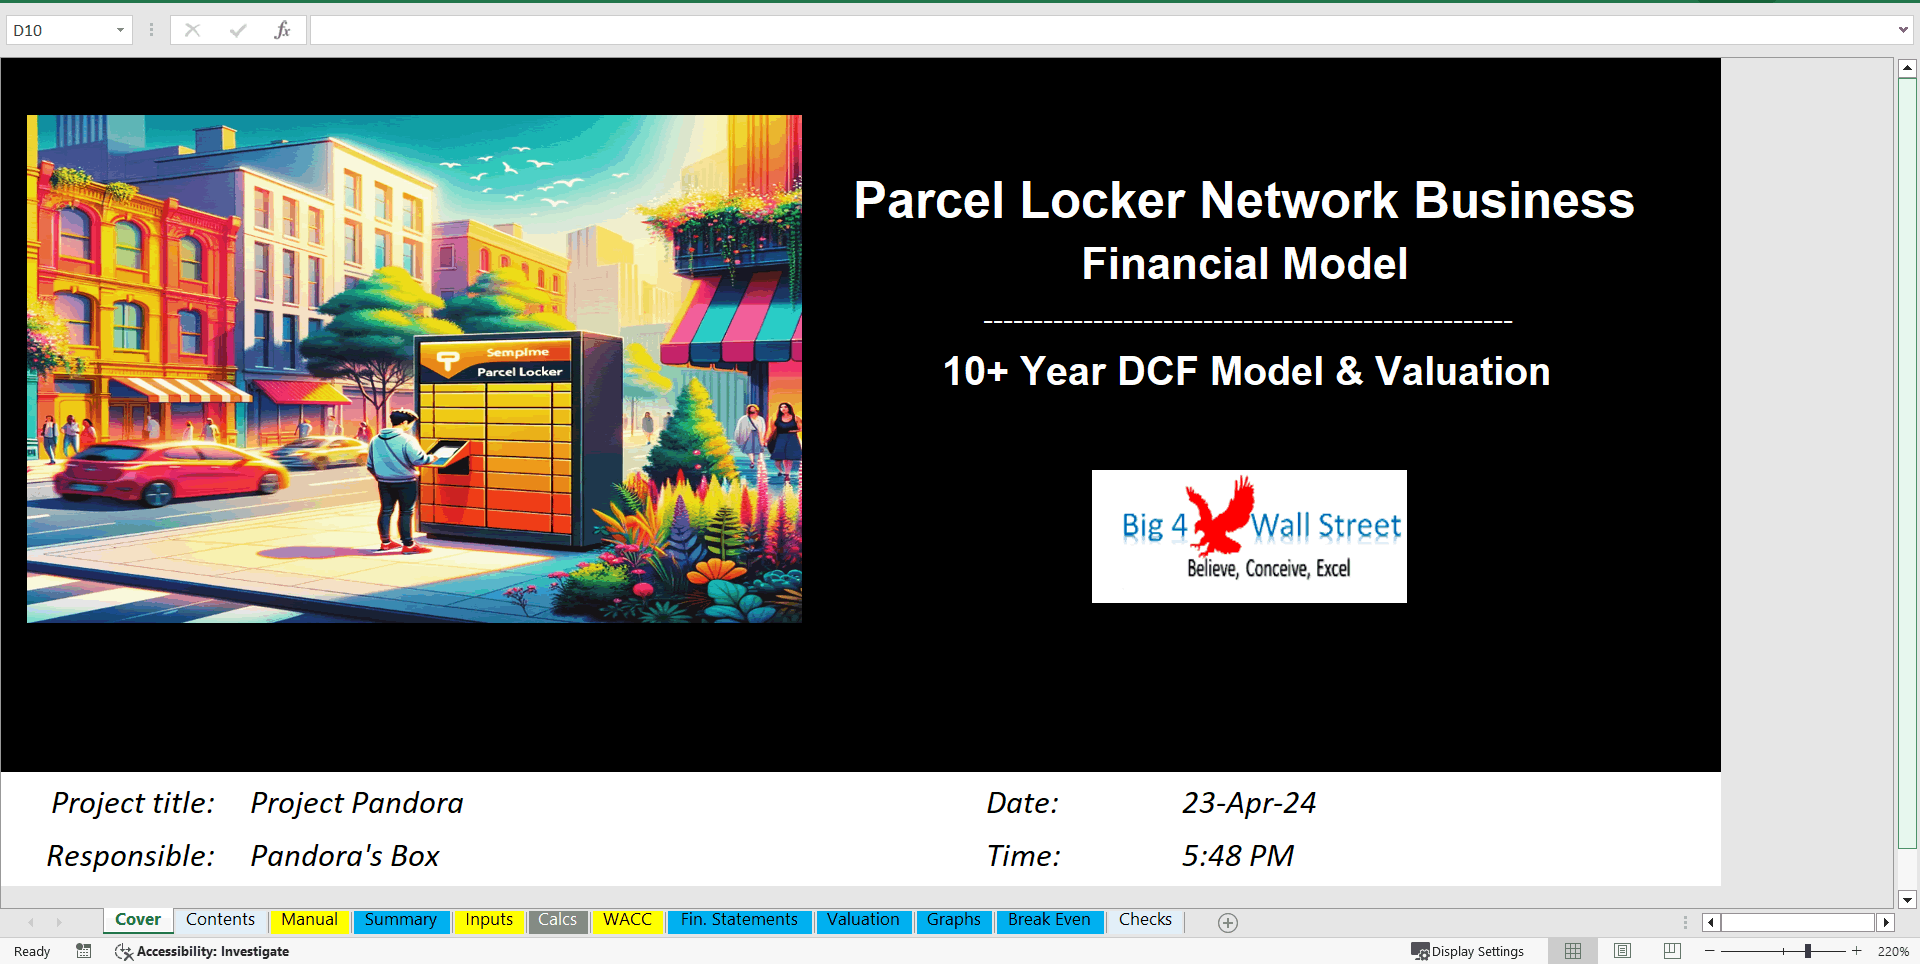 Parcel Locker Network Business Financial Model (DCF & Valuation)